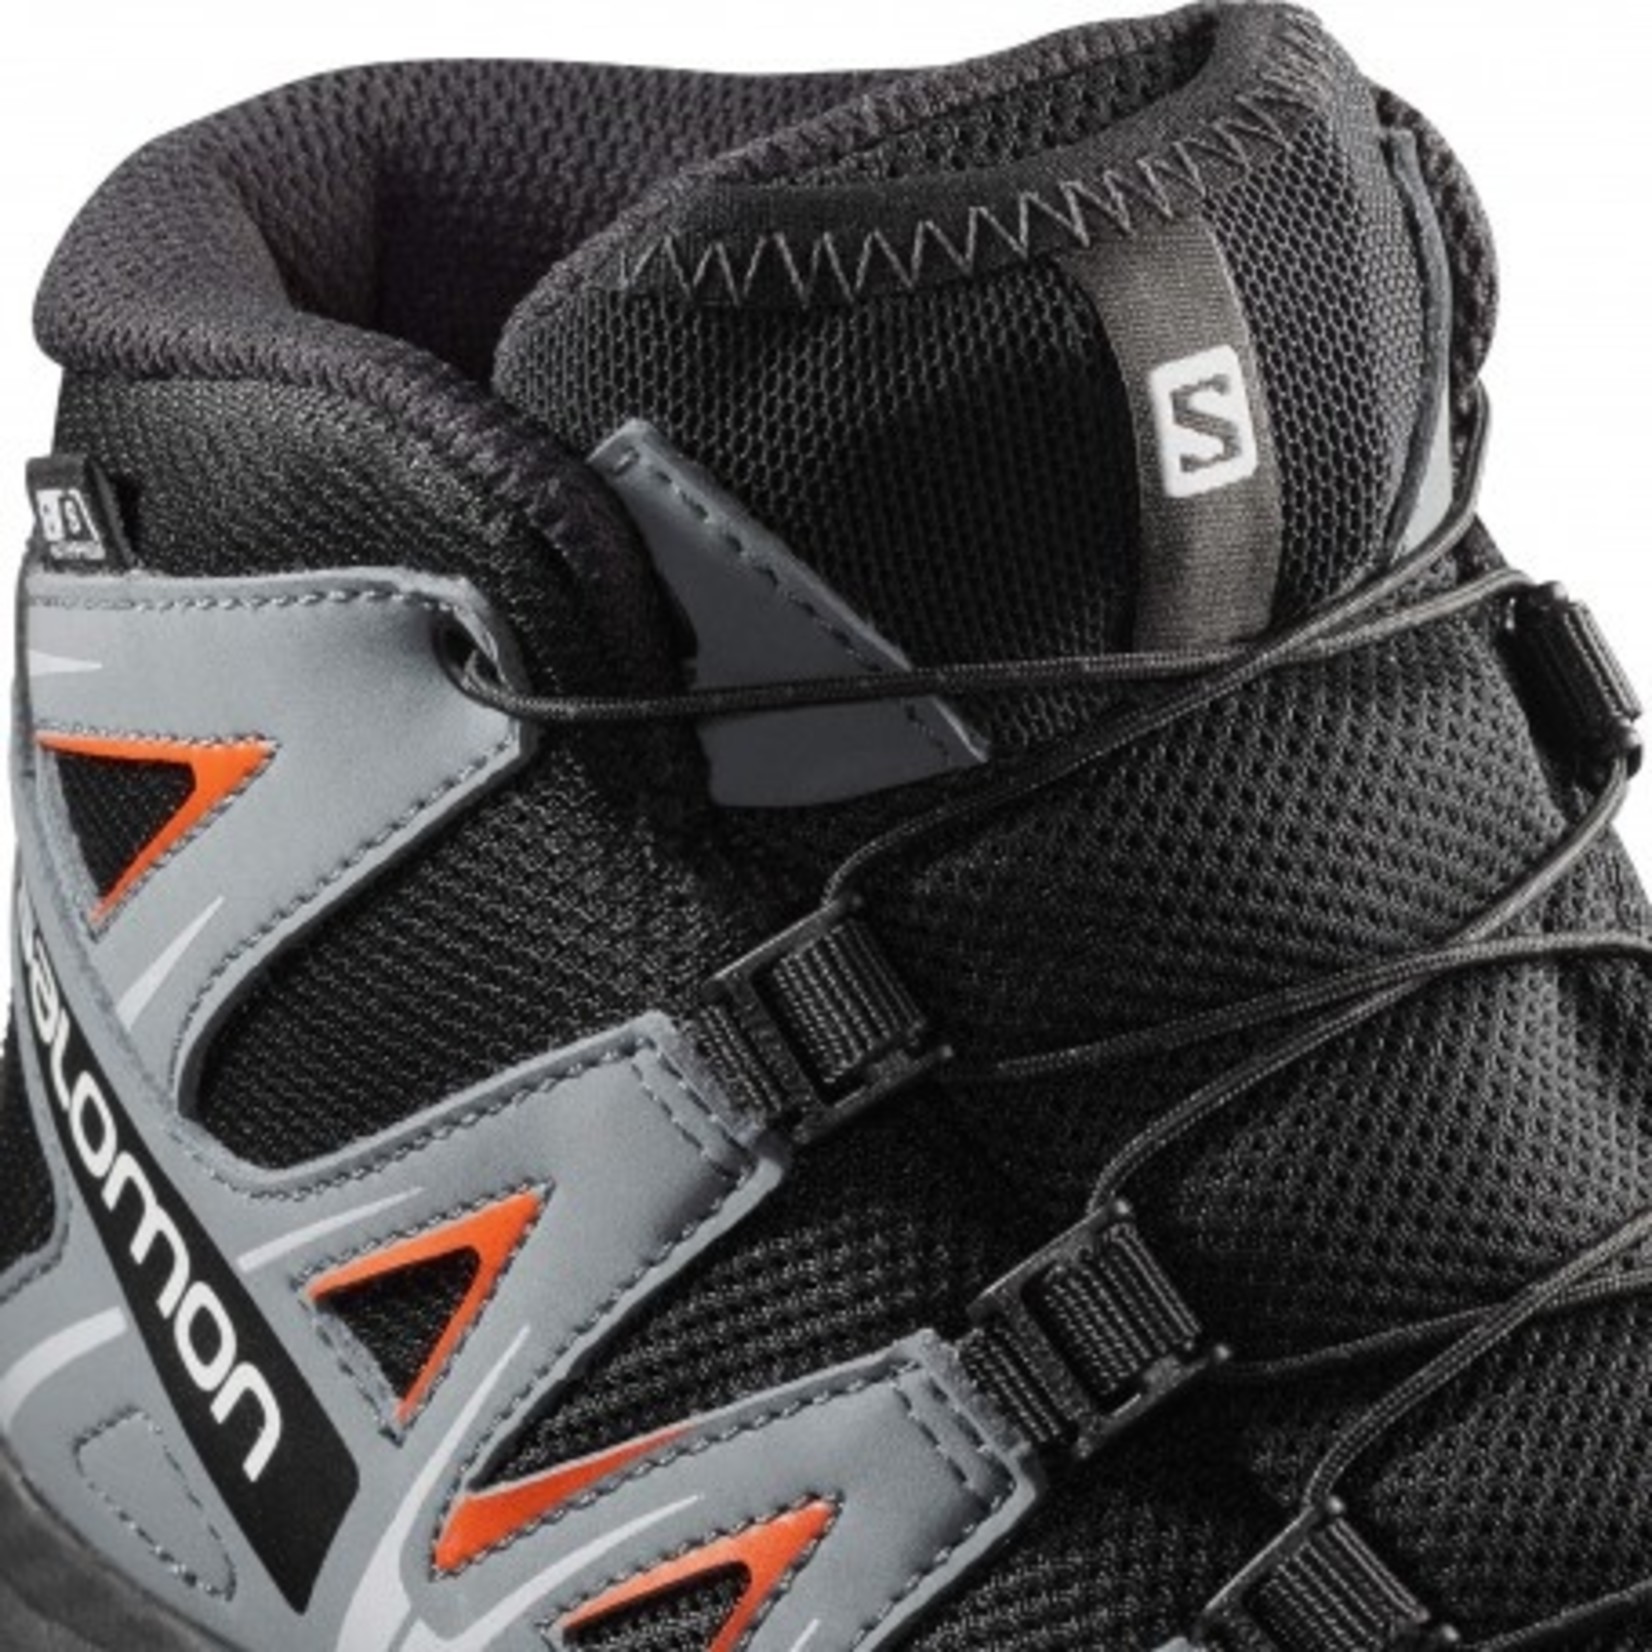 Salomon XA Pro 3D Mid CSWP JR Hiking Boots